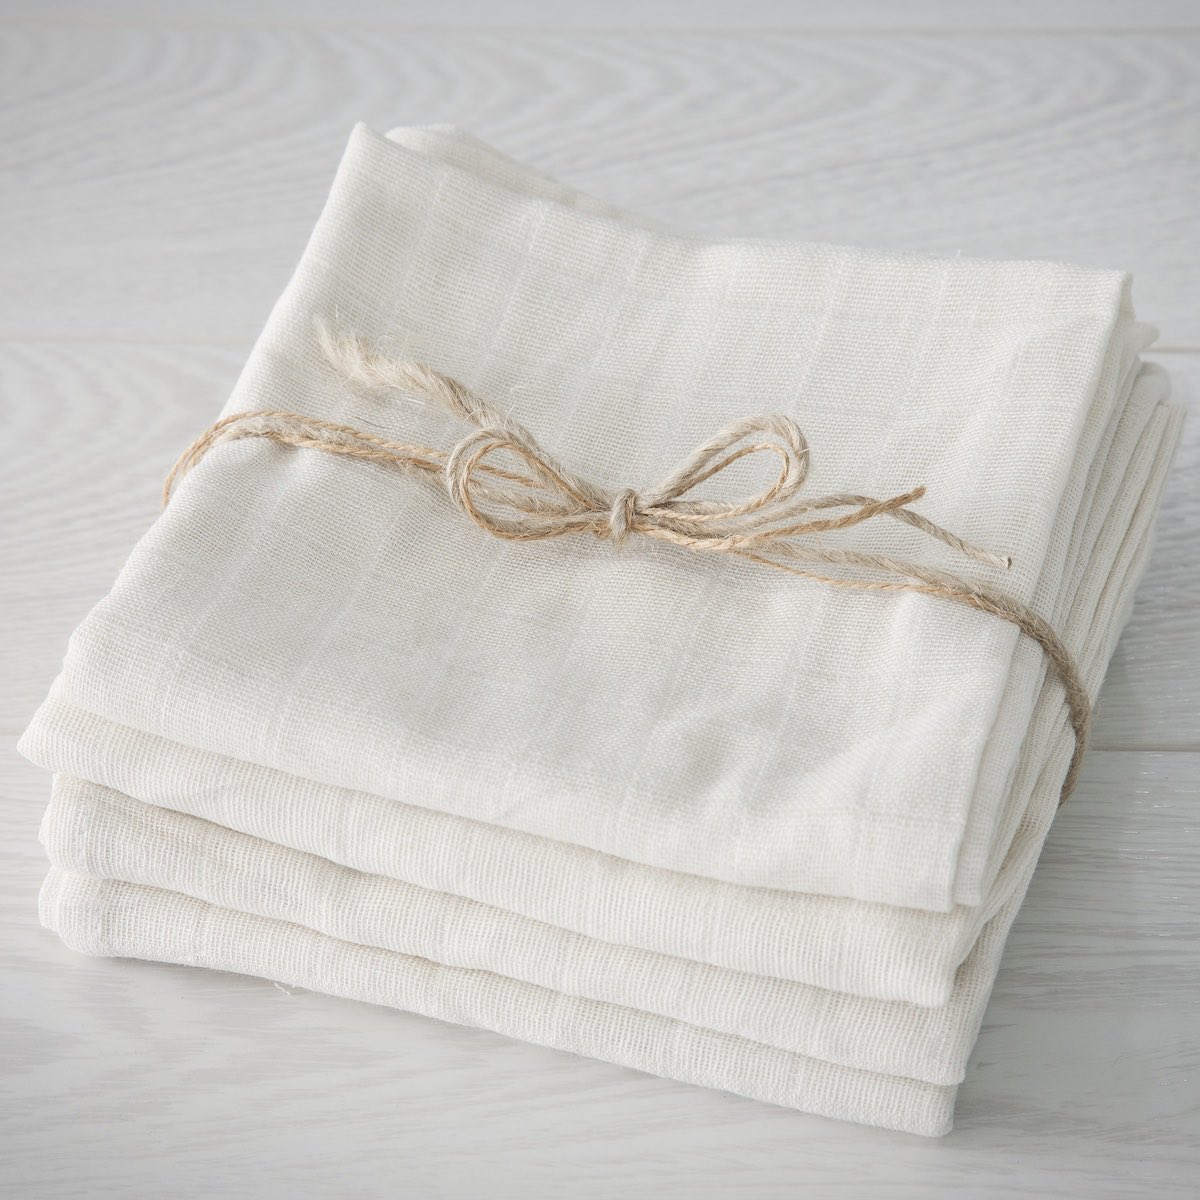 Ruskovilla Cotton nappy for babies